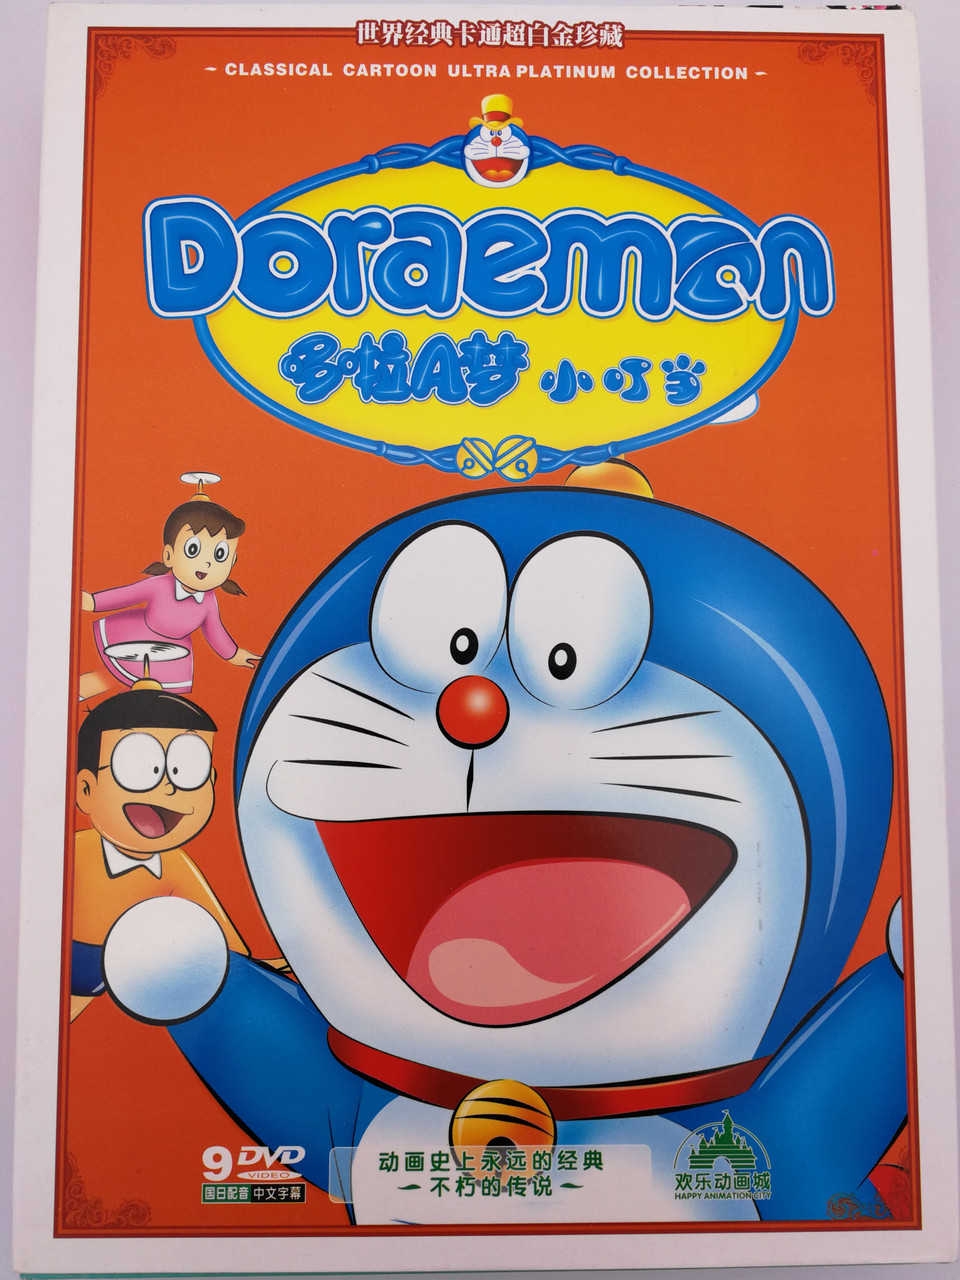 Doraemon 9dvd Box ドラえもん Classical Cartoon Ultra Platinum Collection Written By Fujiko Fujio Japanese Classic Anime Series 98 Episodes Hk 1008 Bibleinmylanguage